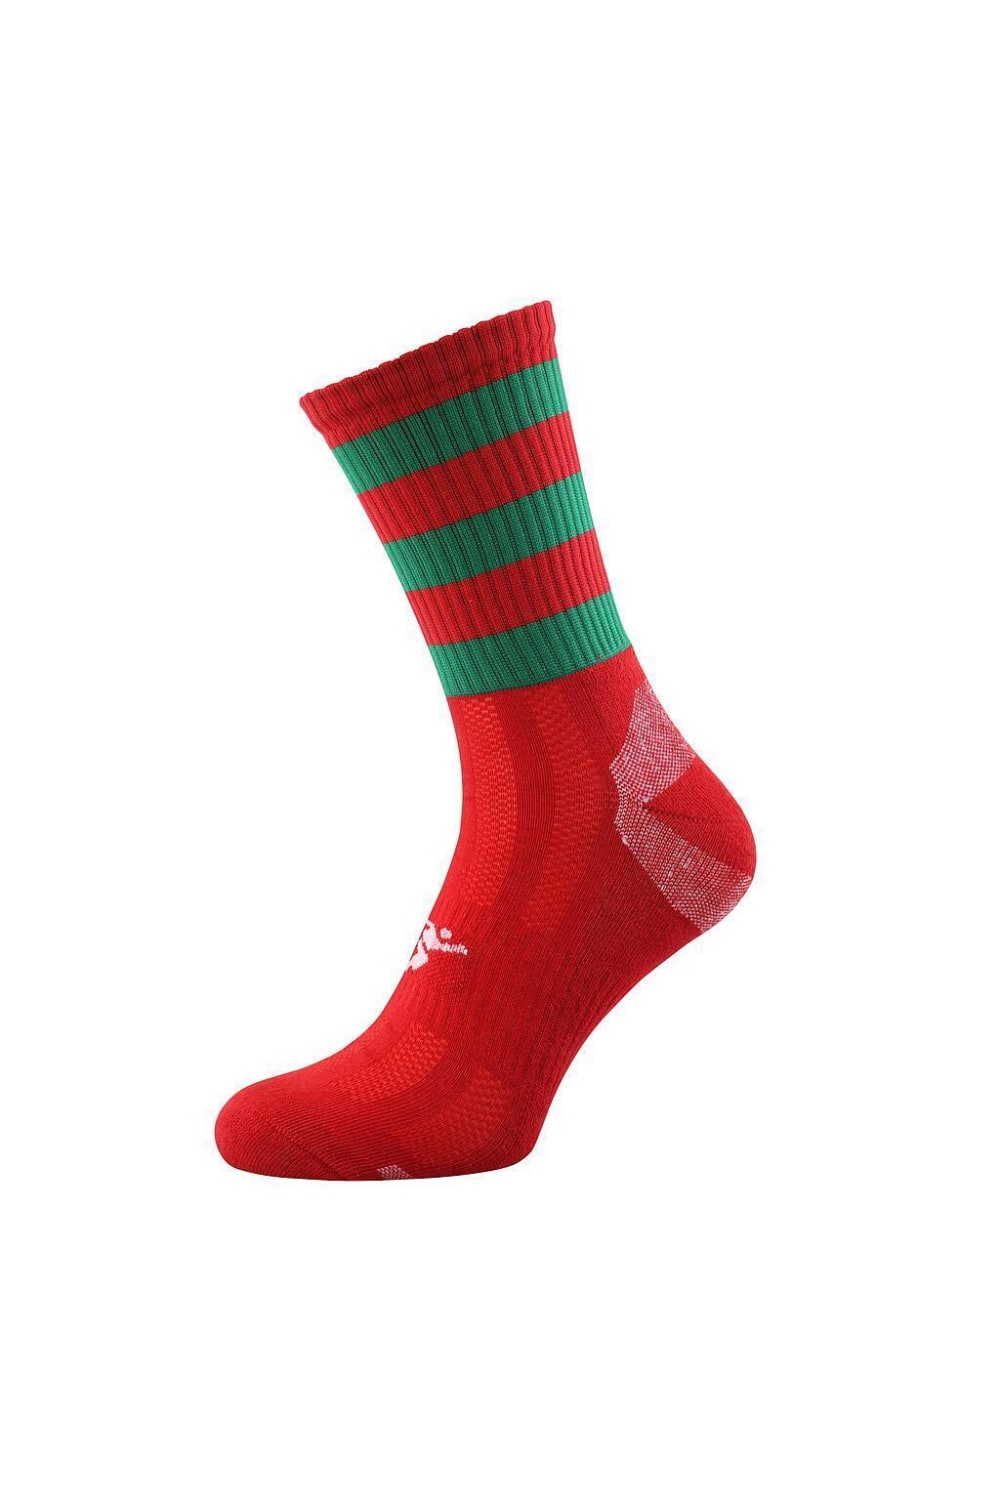 Precision Childrens/Kids Pro Hooped Socks (Red/Green)